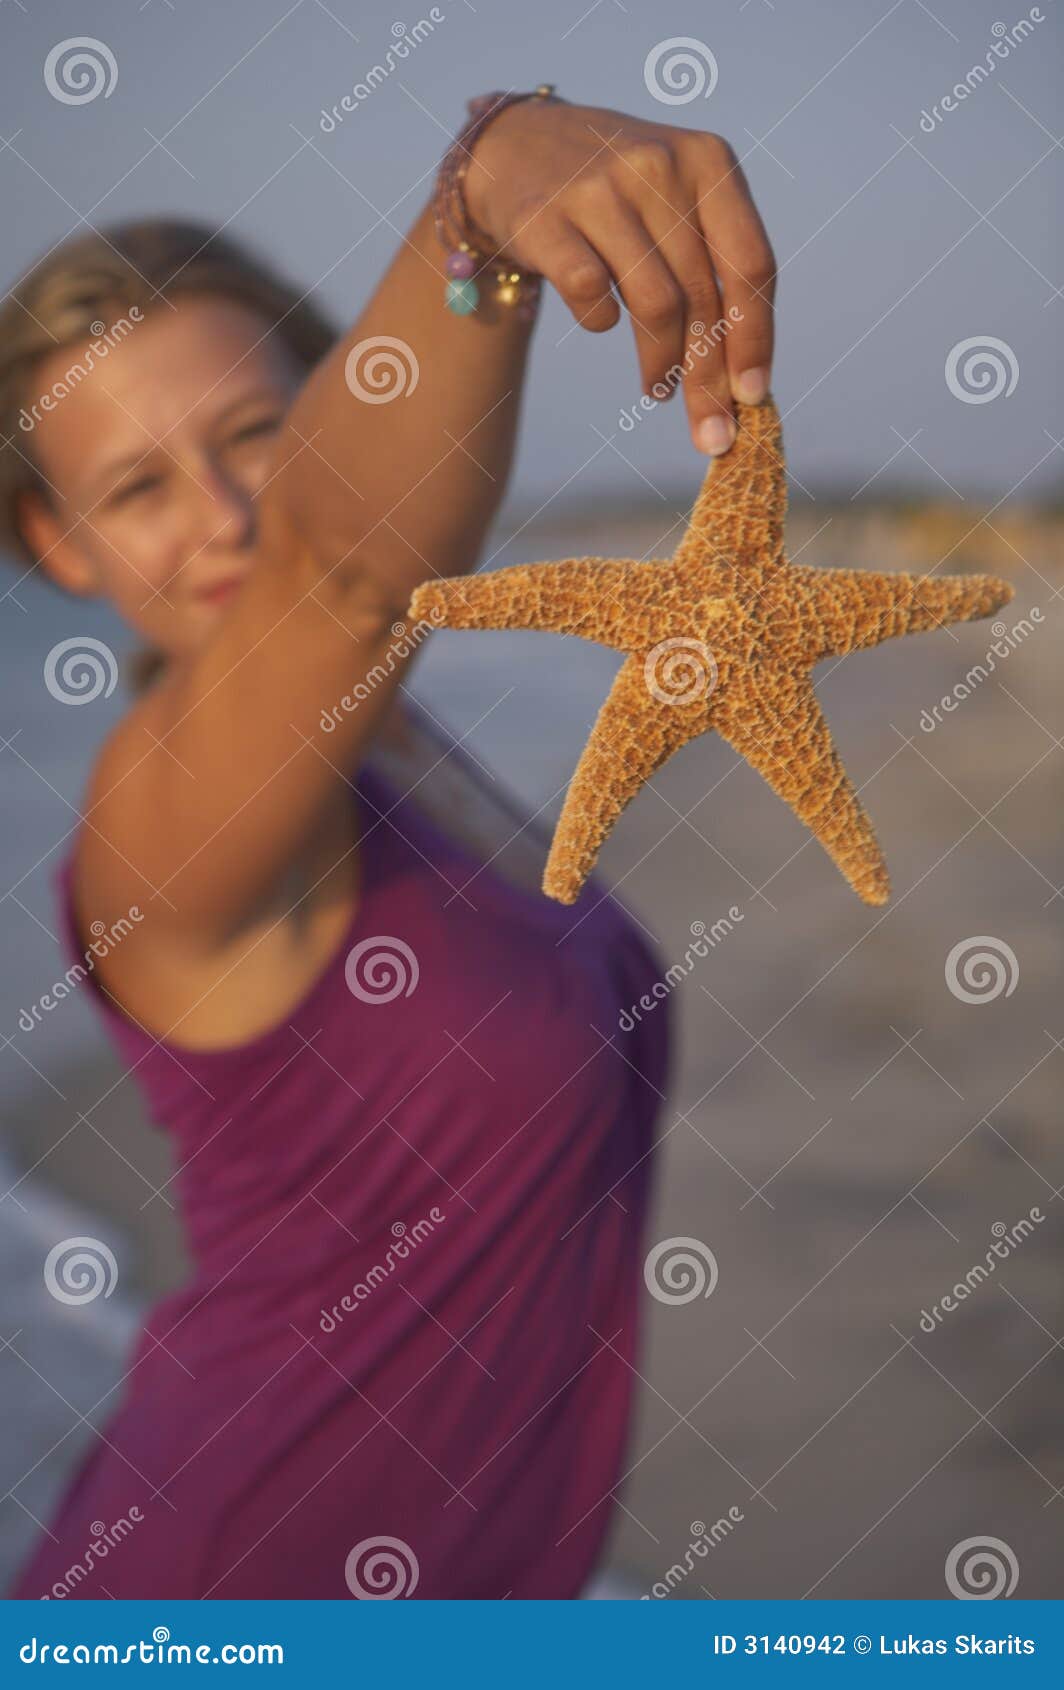 cute girl is holding seastar